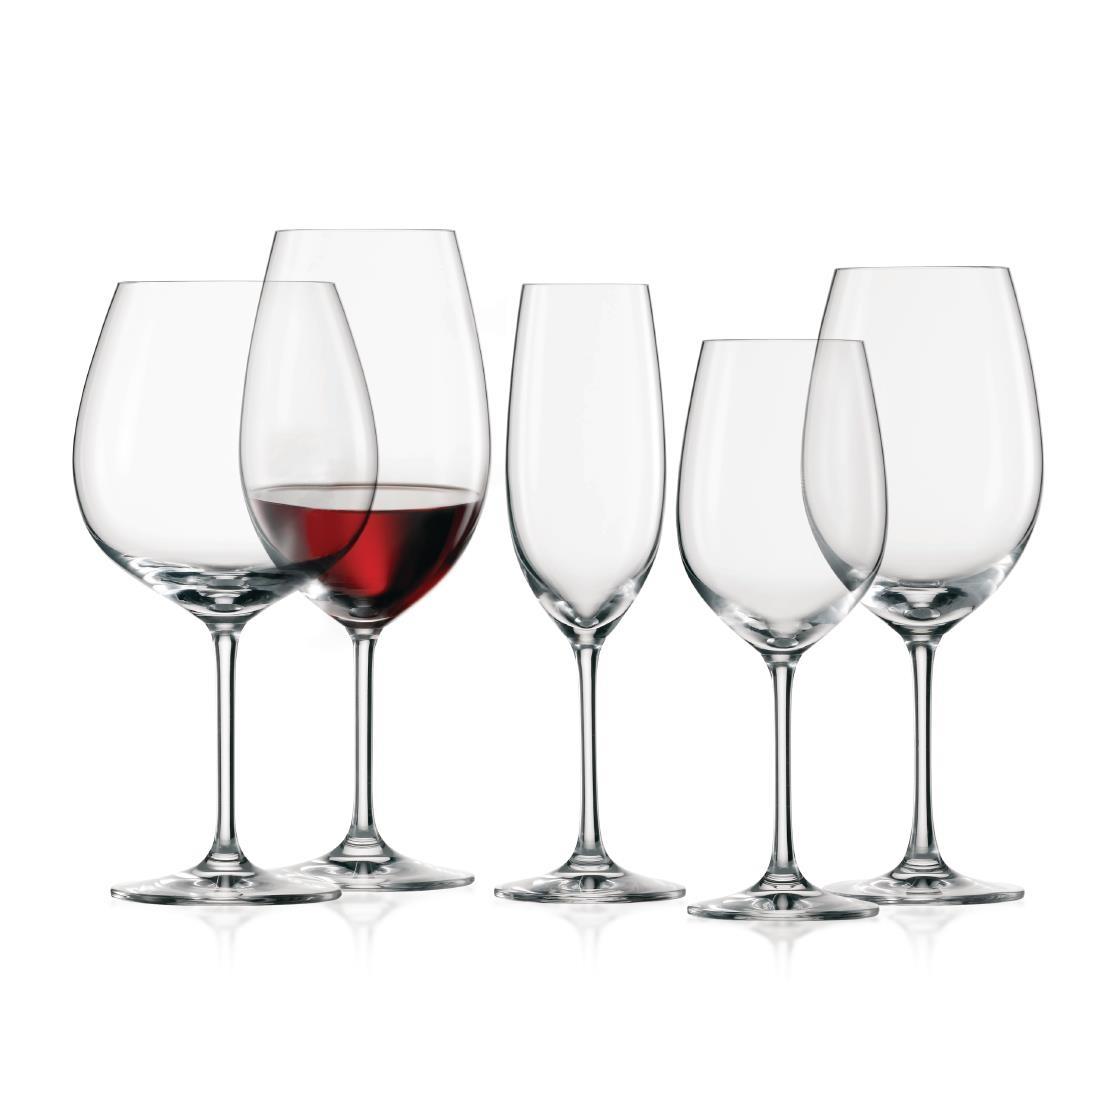 Schott Zwiesel Ivento White Wine Glasses 340ml (Pack of 6) - GL136  - 3